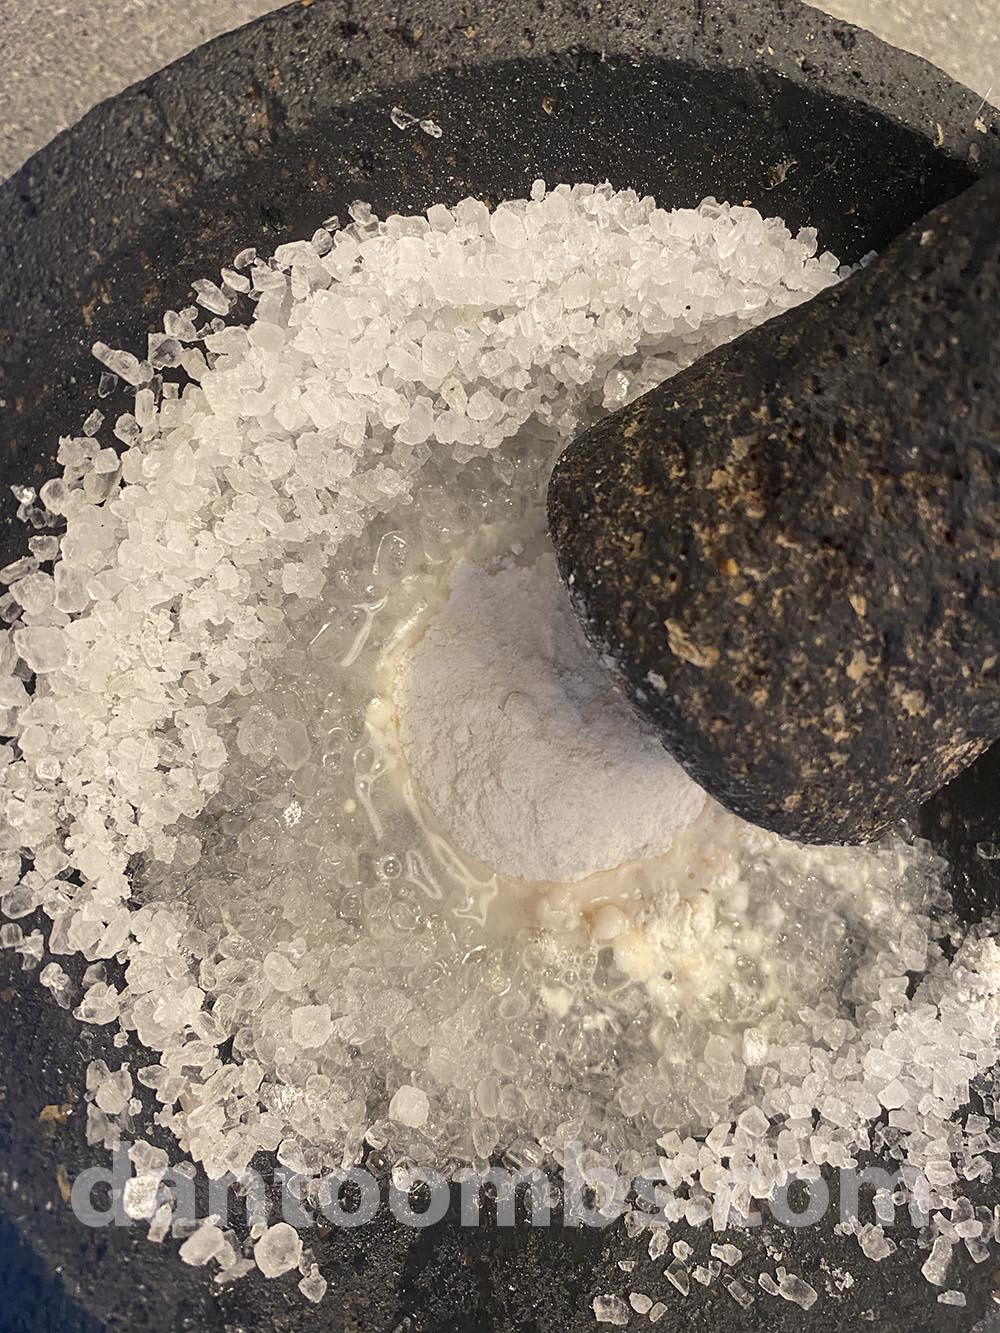 Pounding rock salt, flour and water